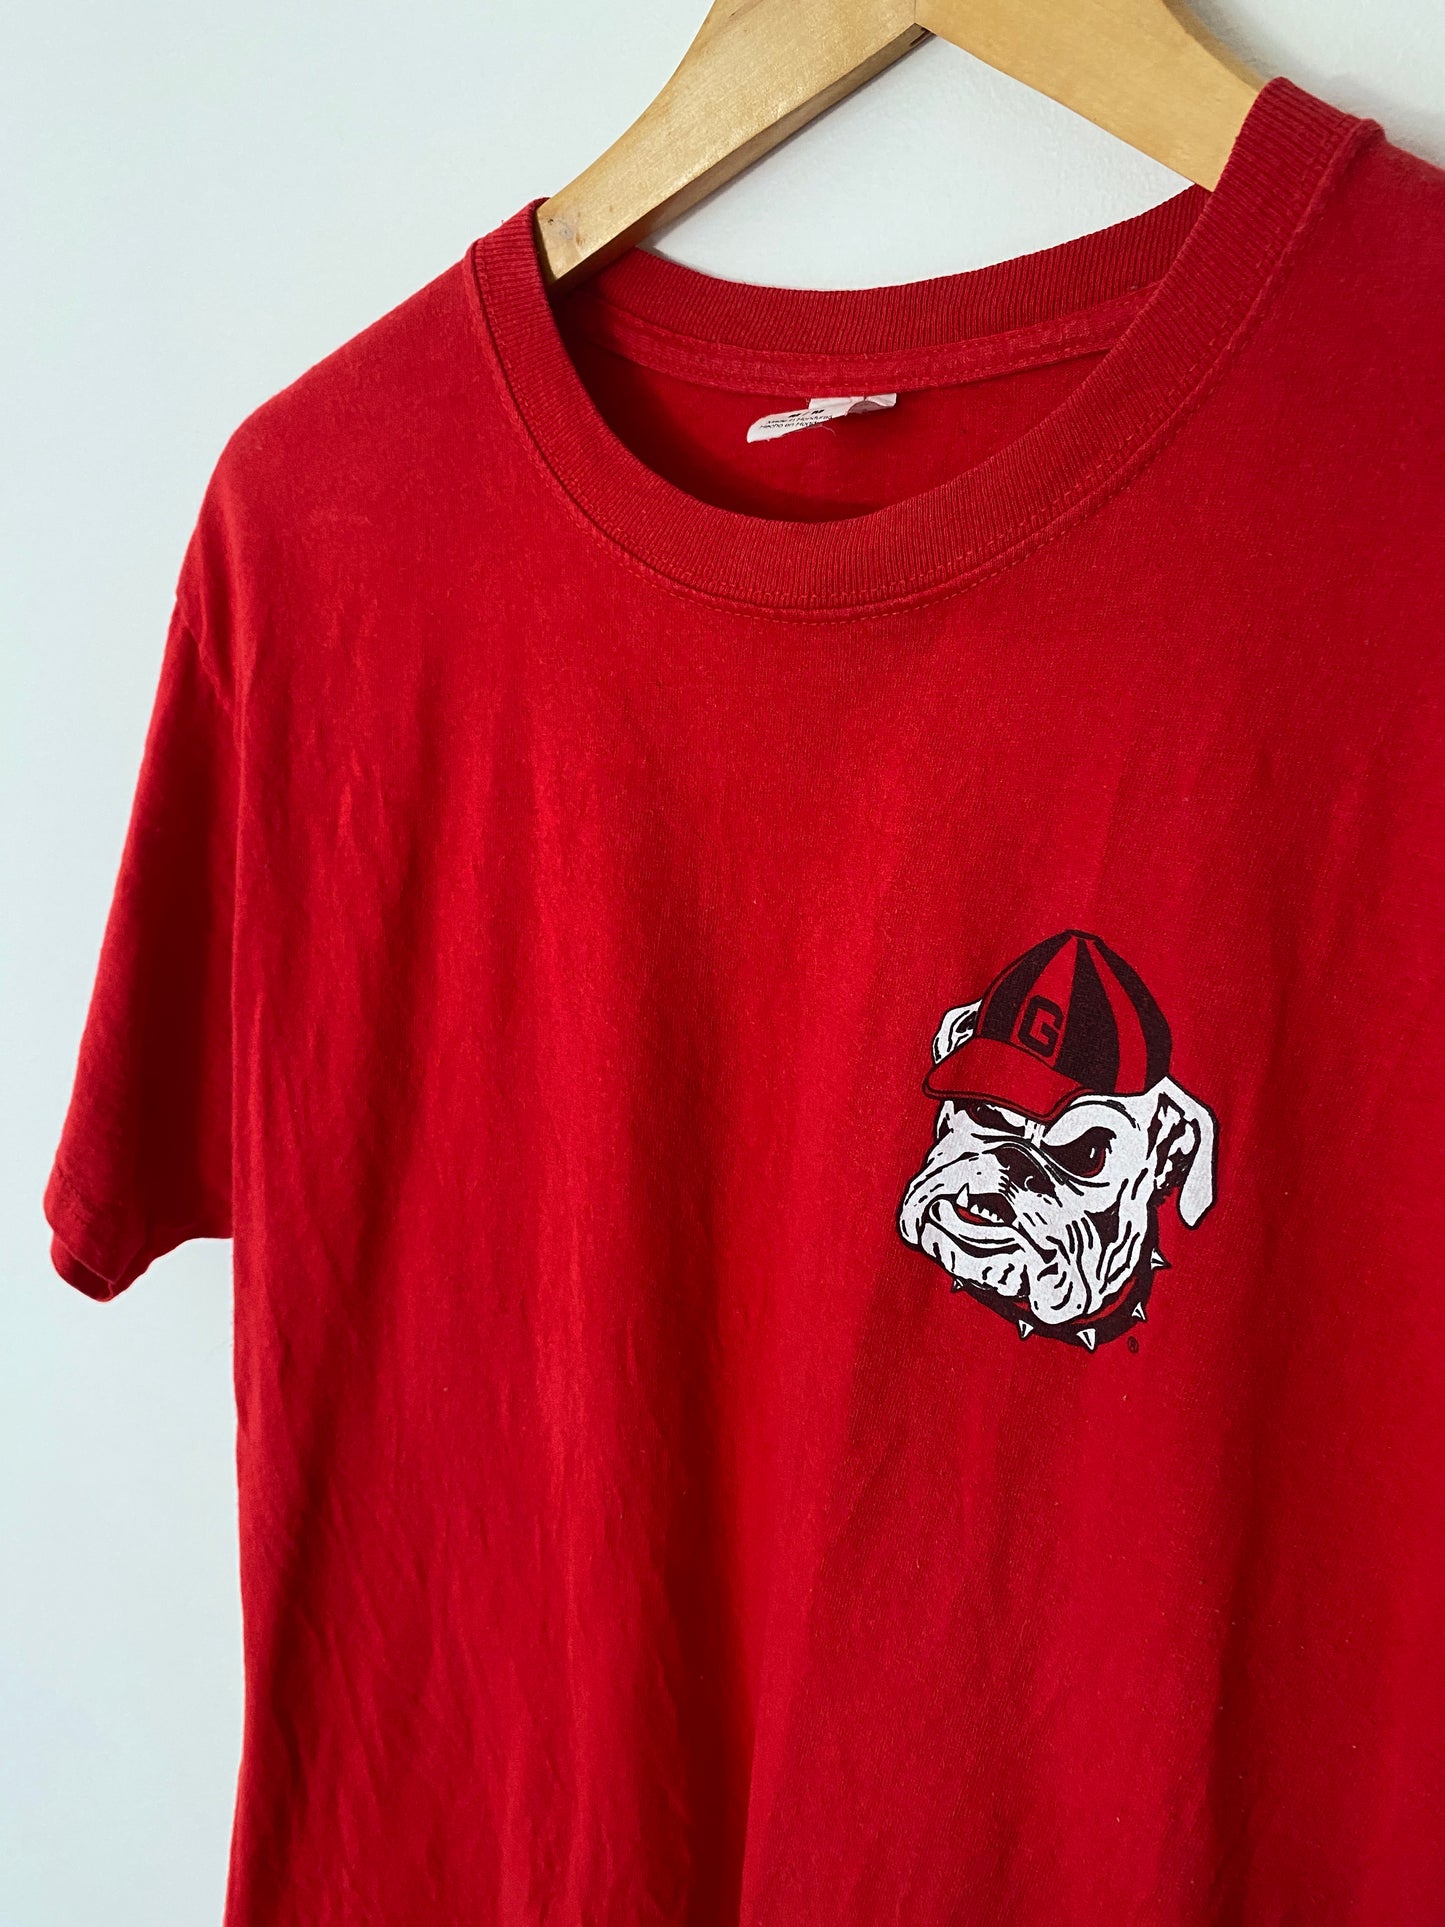 Georgia Bulldogs Football T-Shirt - M